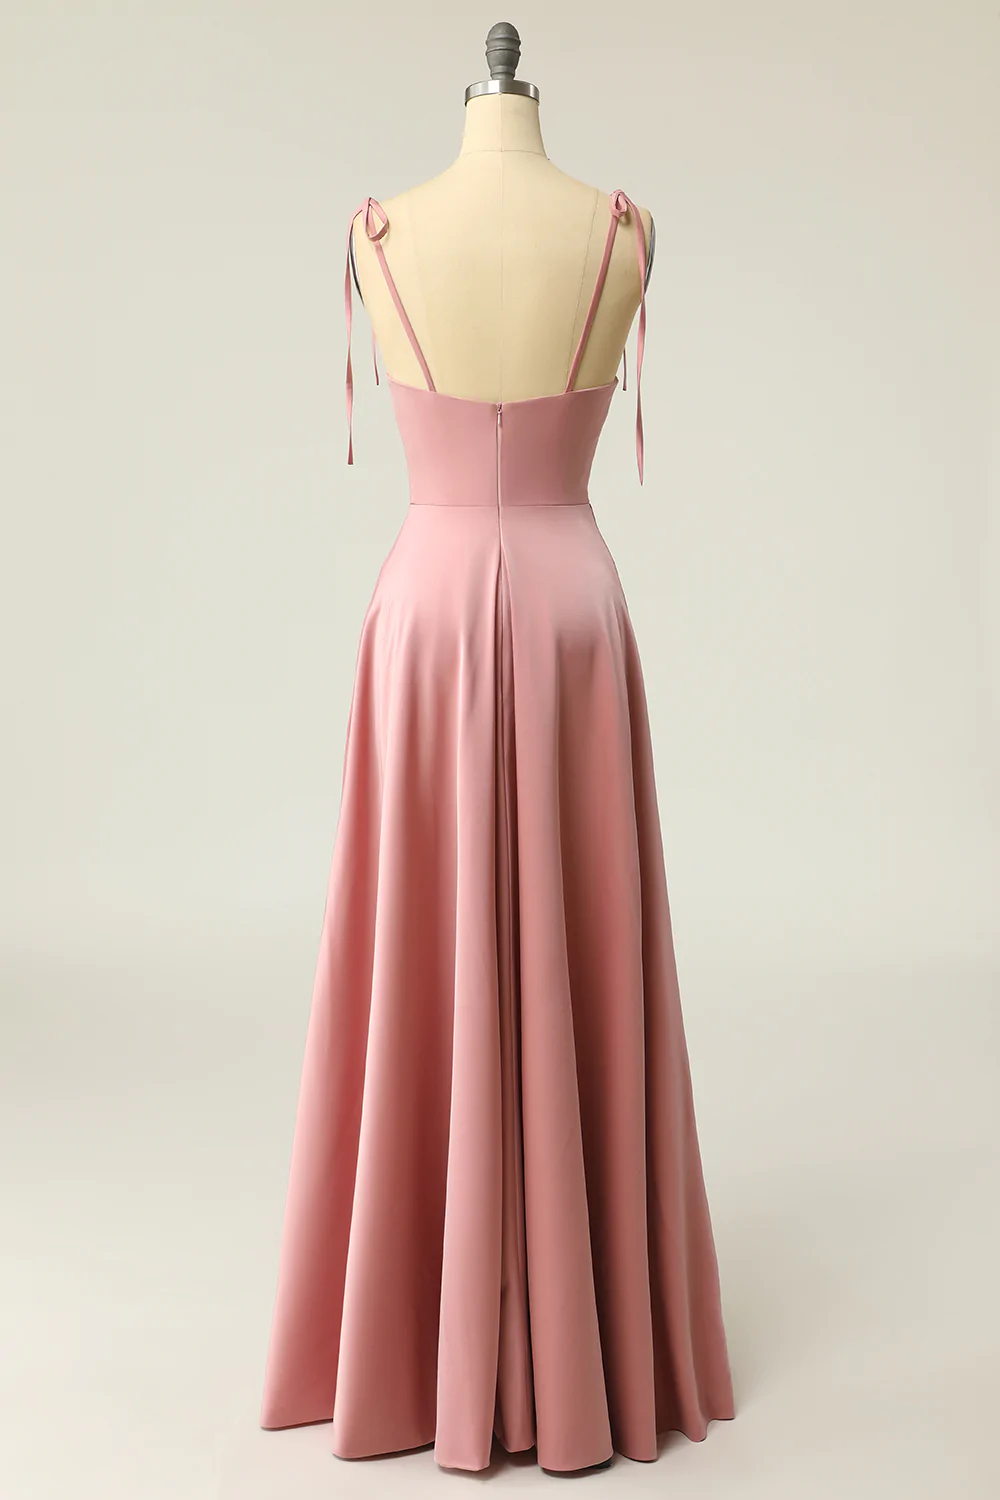 Blush Pink Cowl Neck Satin Long Prom Dress A-line Junior Prom Dress Y690